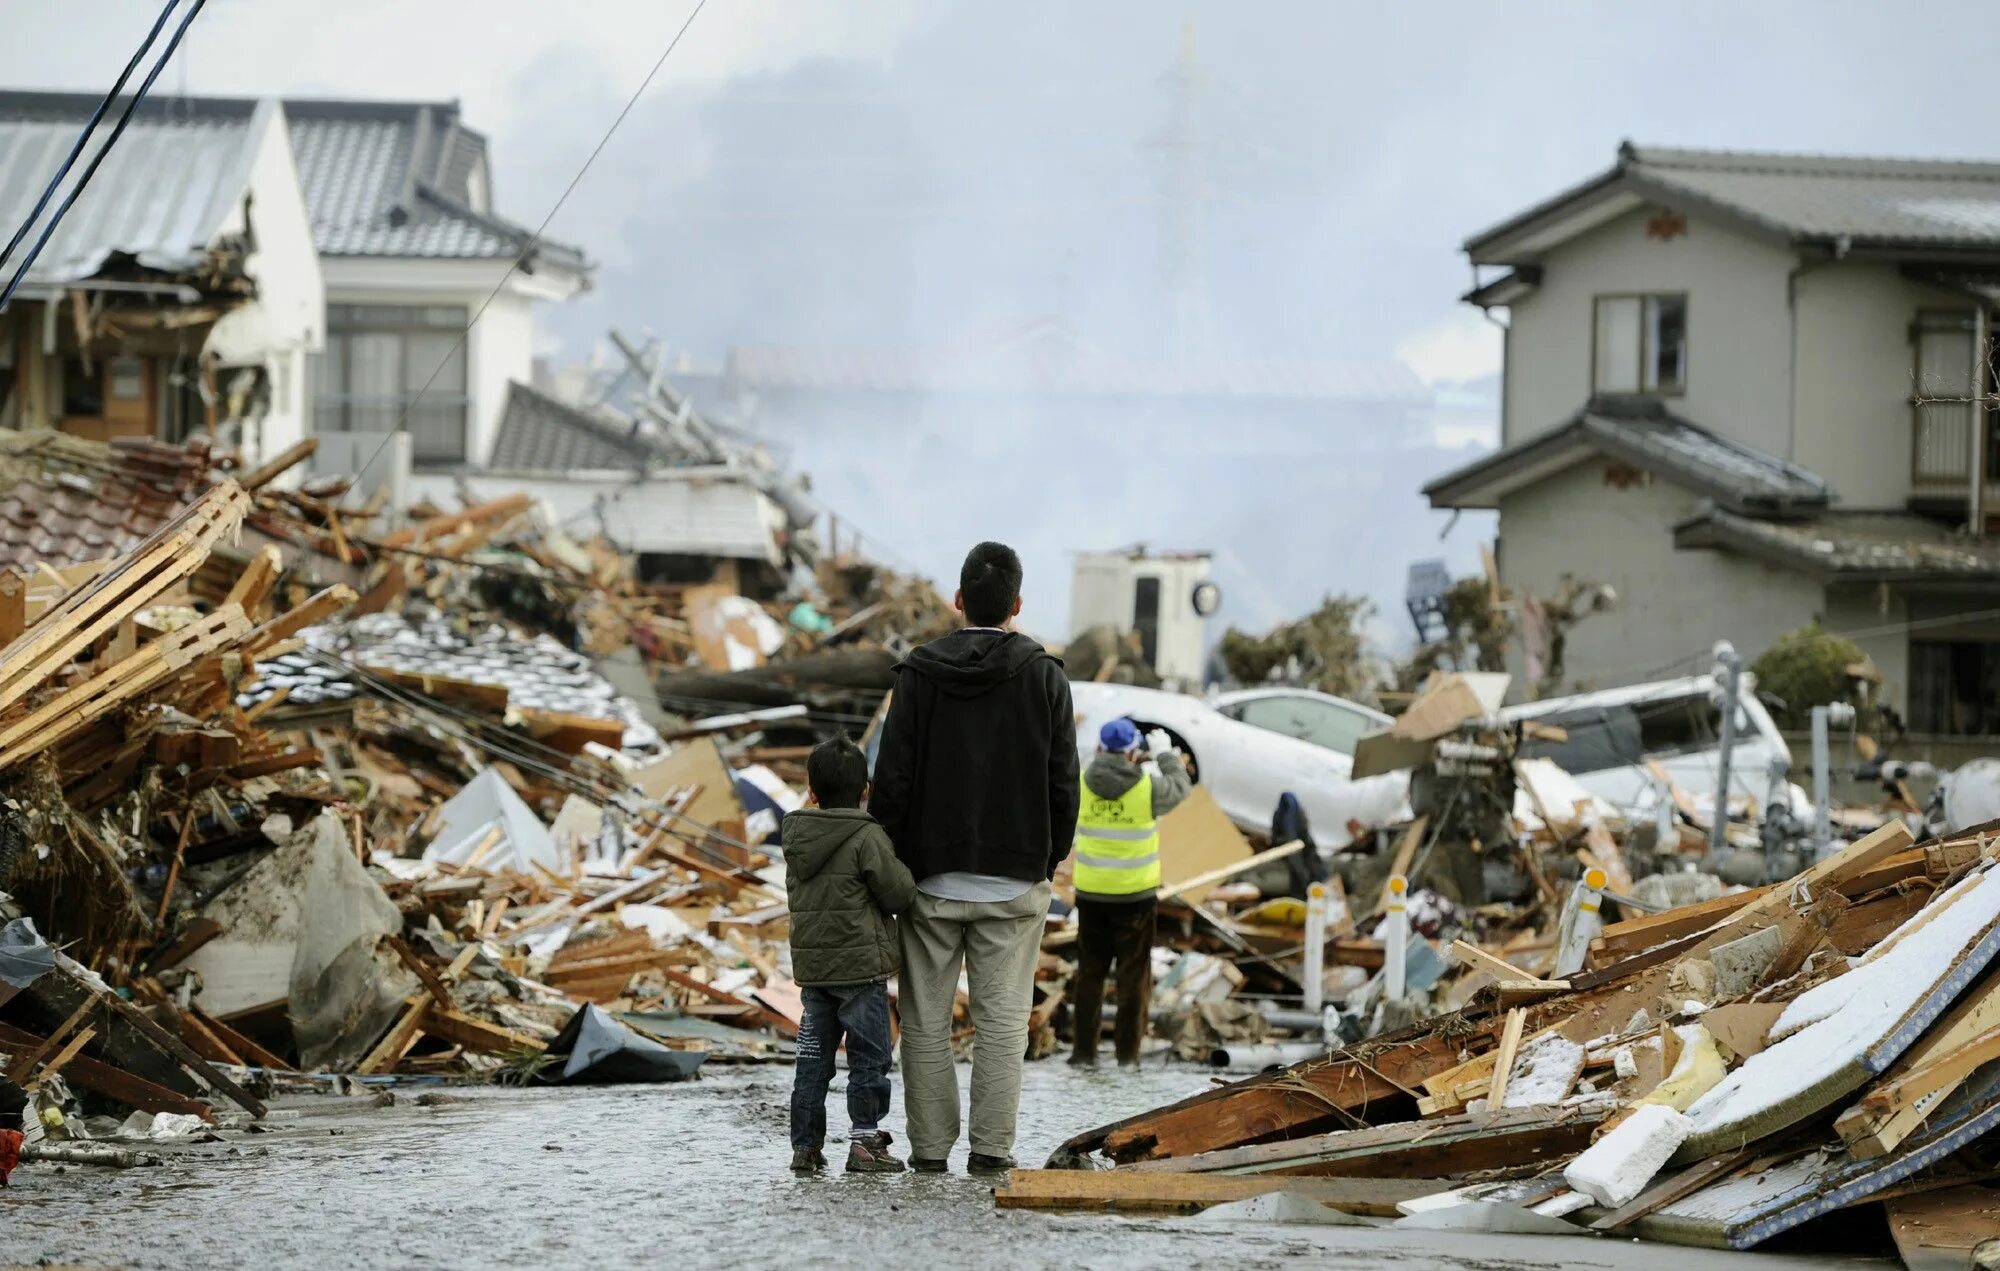 Землетрясение цунами. ЦУНАМИ В Японии в 2011. Землетрясение и ЦУНАМИ В Японии. Стихийные бедствия в Японии ЦУНАМИ. Великое землетрясение Восточной Японии 2011.